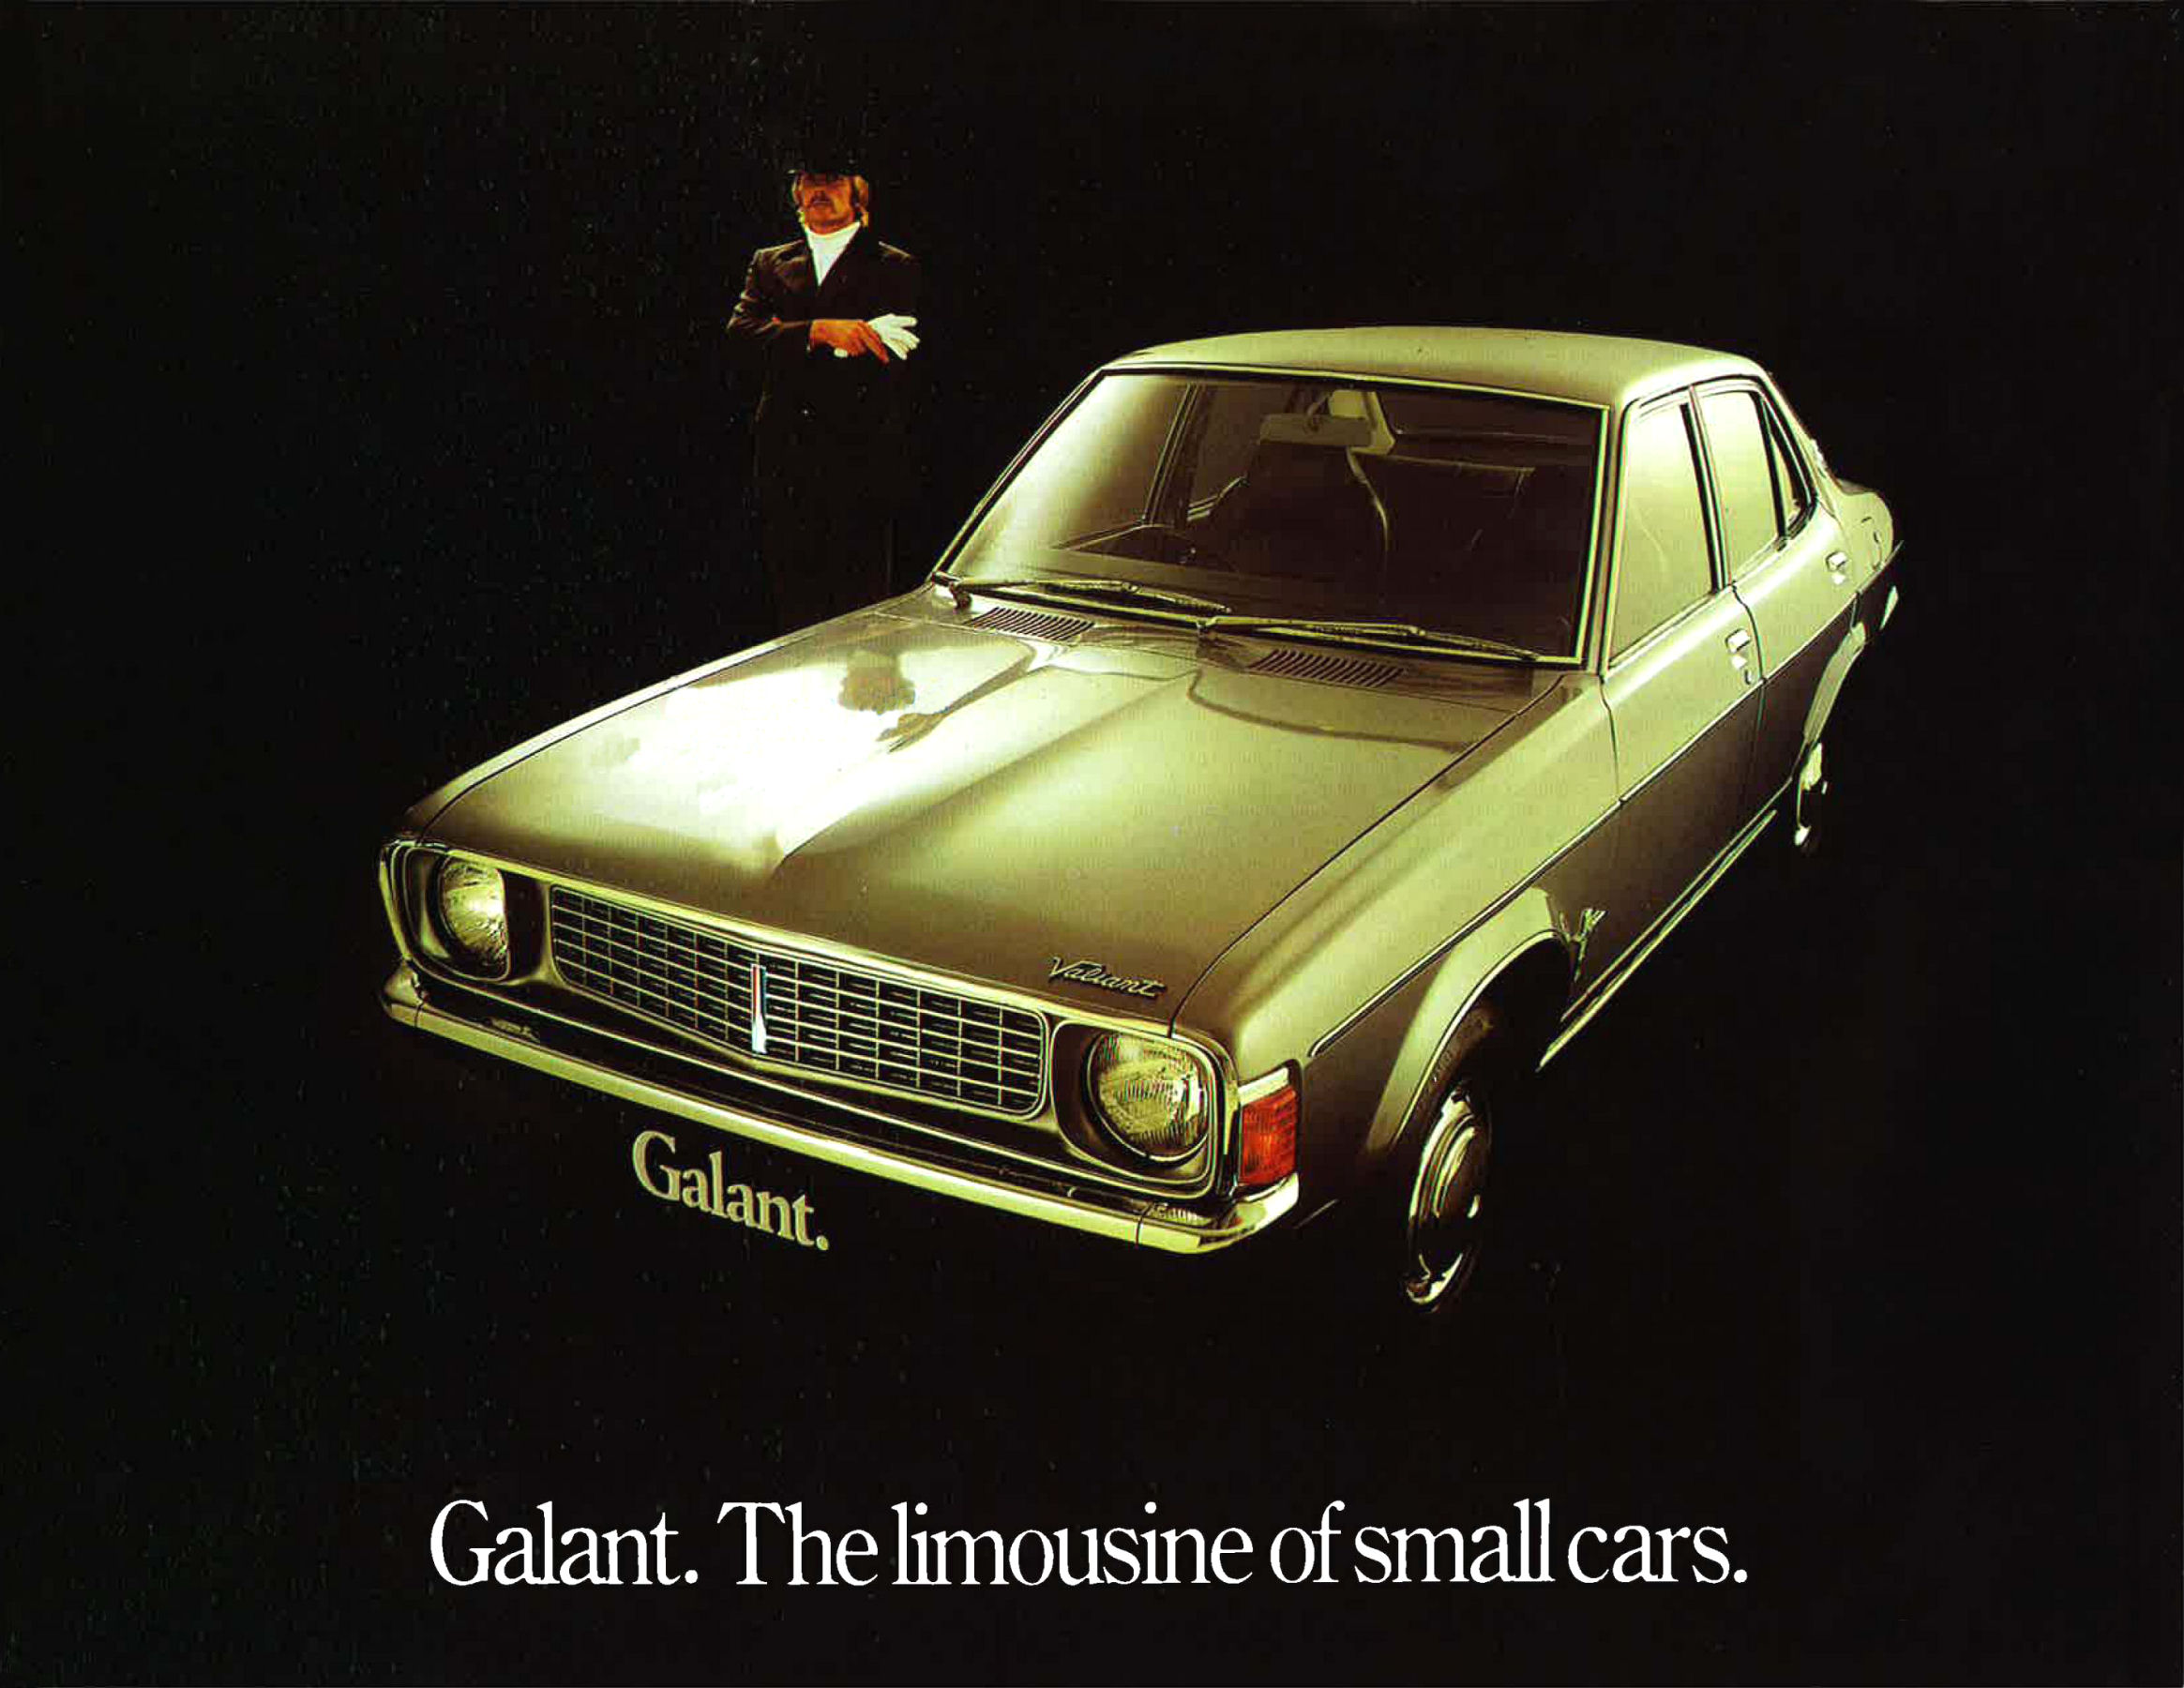 1974 Chrysler GC Valiant Galant Sedan-01